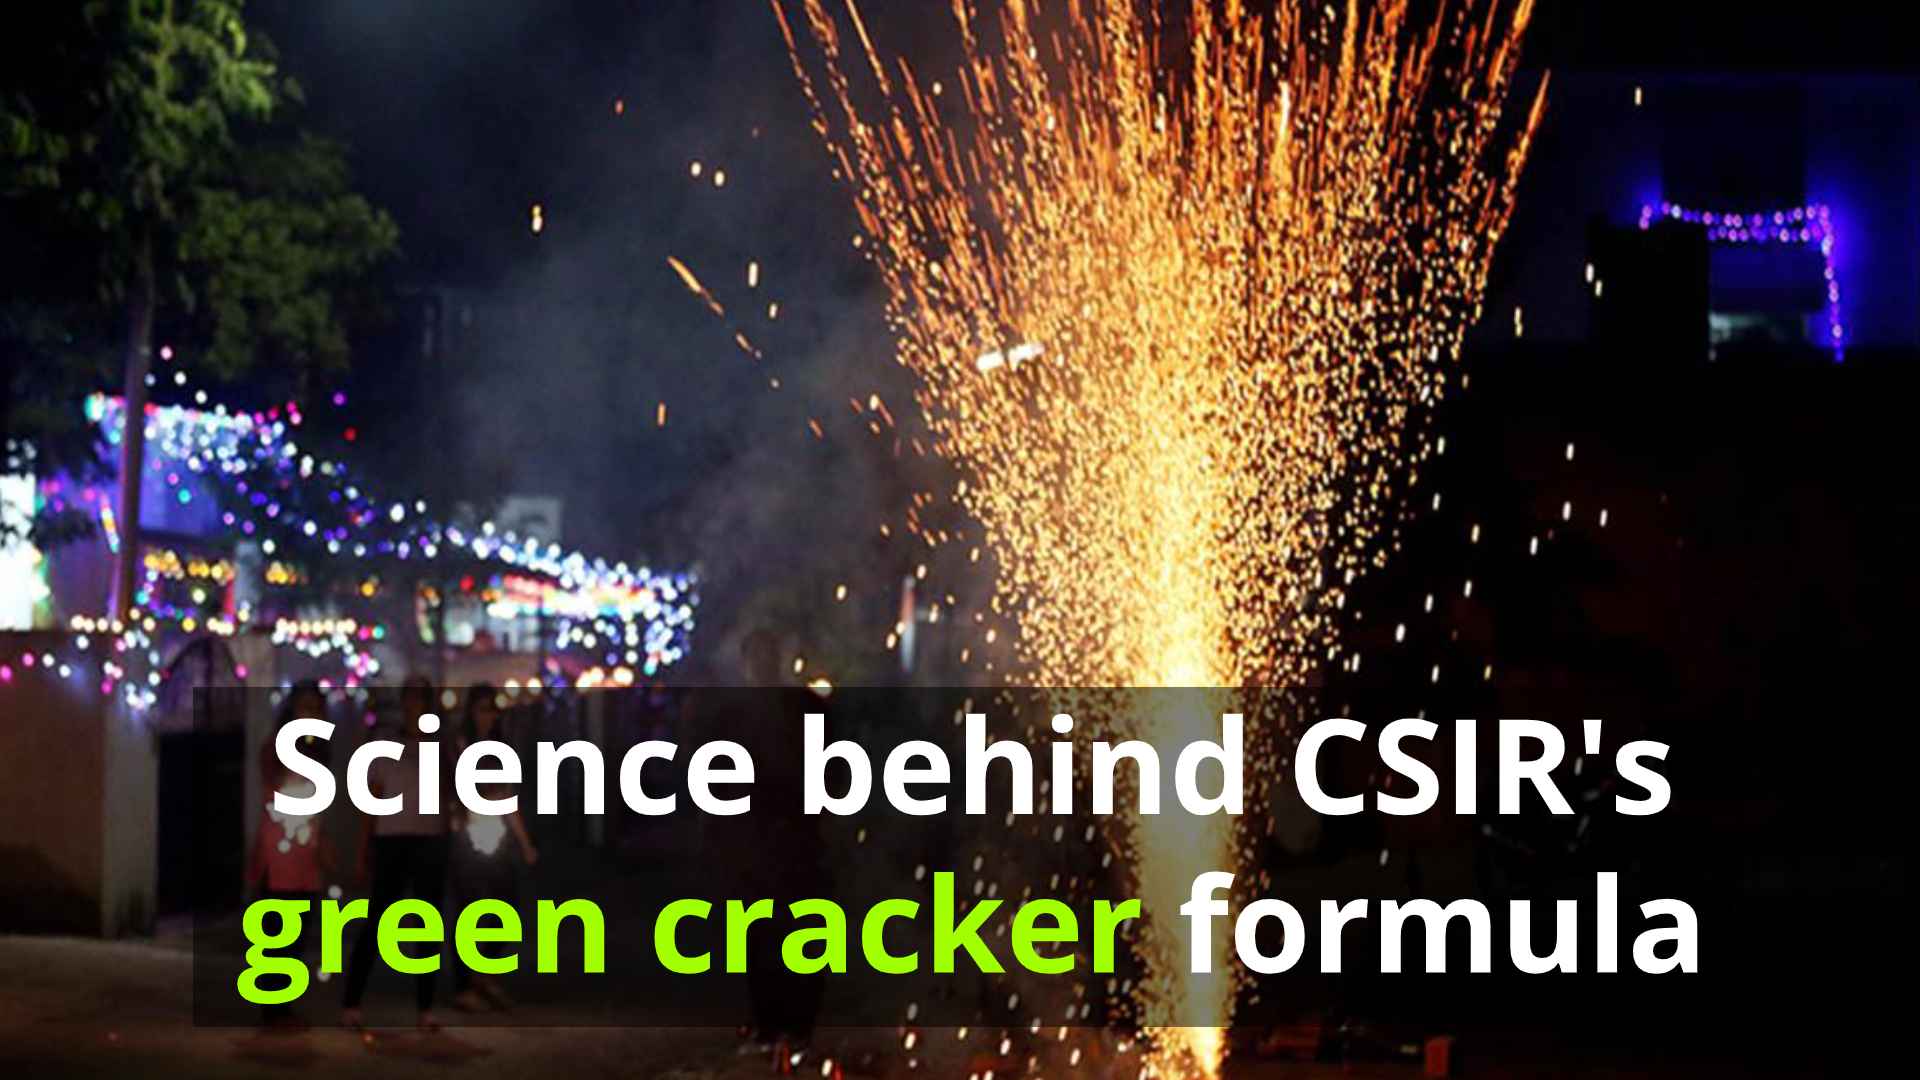 The science behind CSIRs green cracker formula